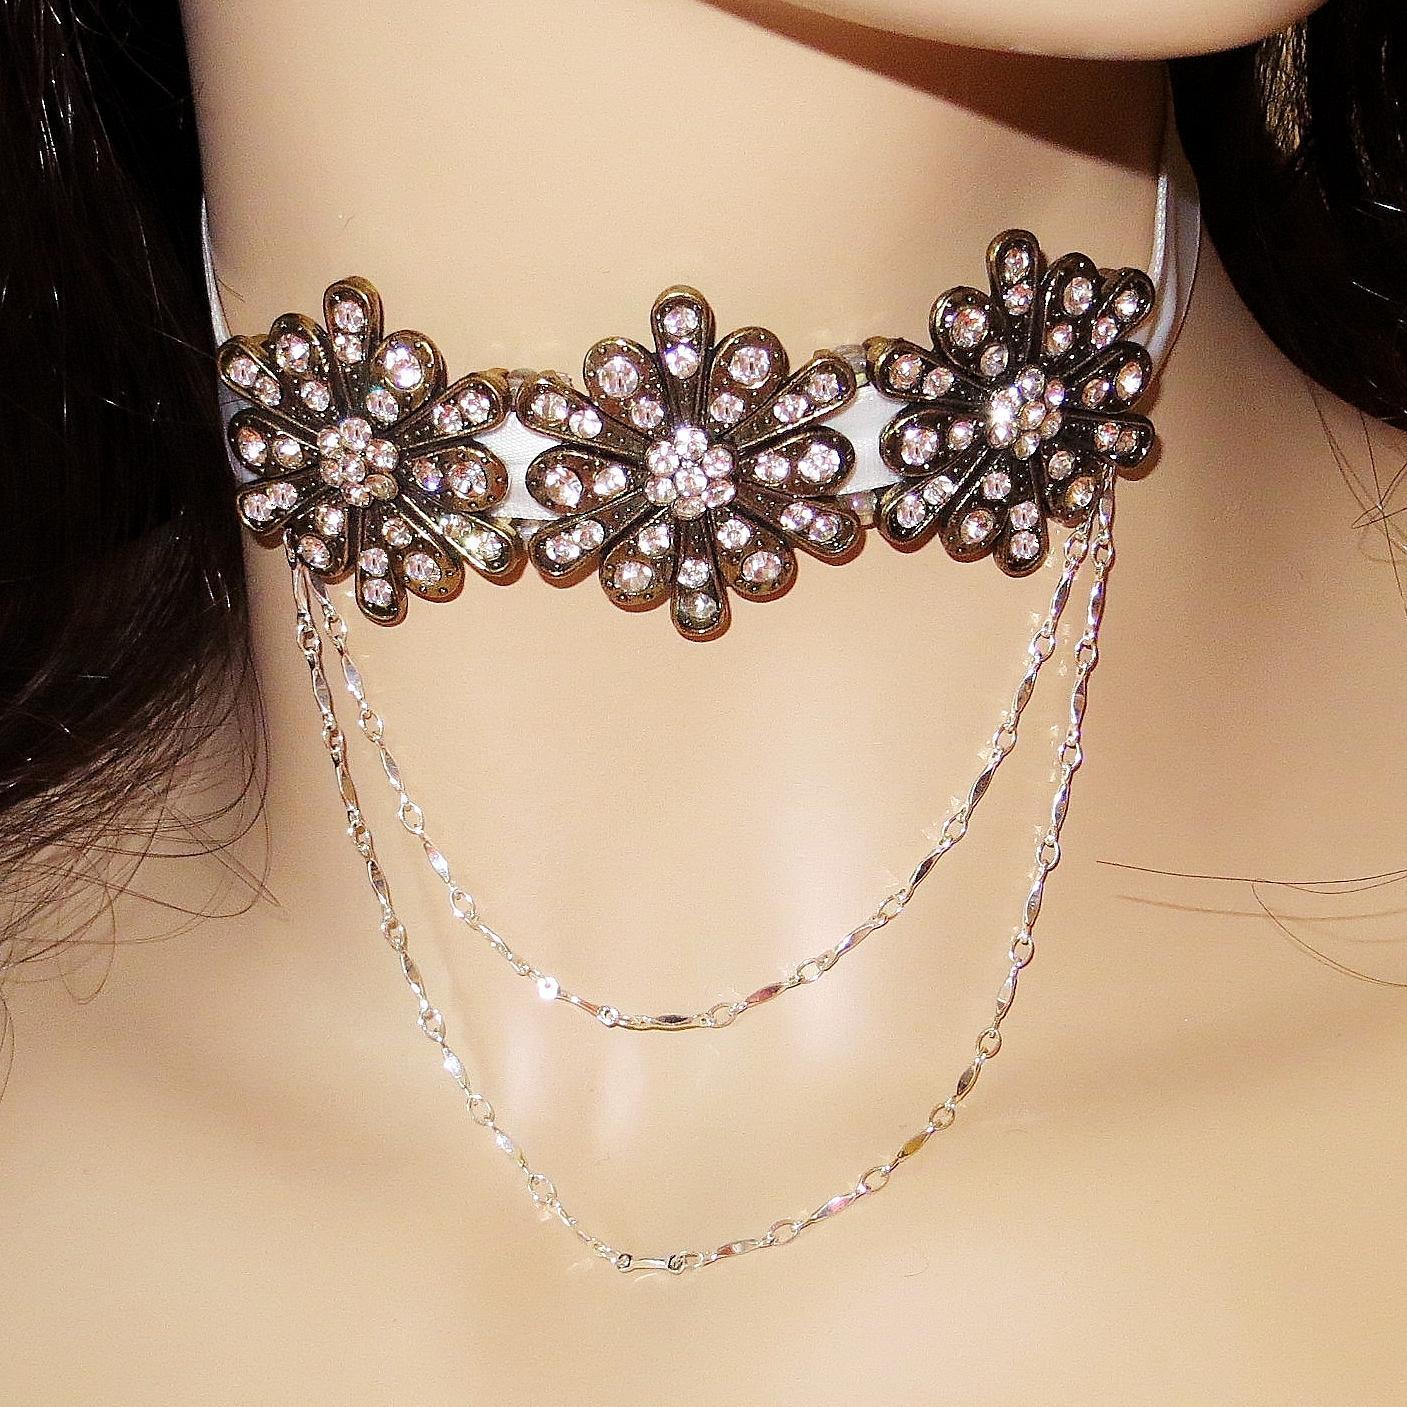 Brasstone Starburst Elements Ribbon Choker Necklace Under The Hoode - $41.50